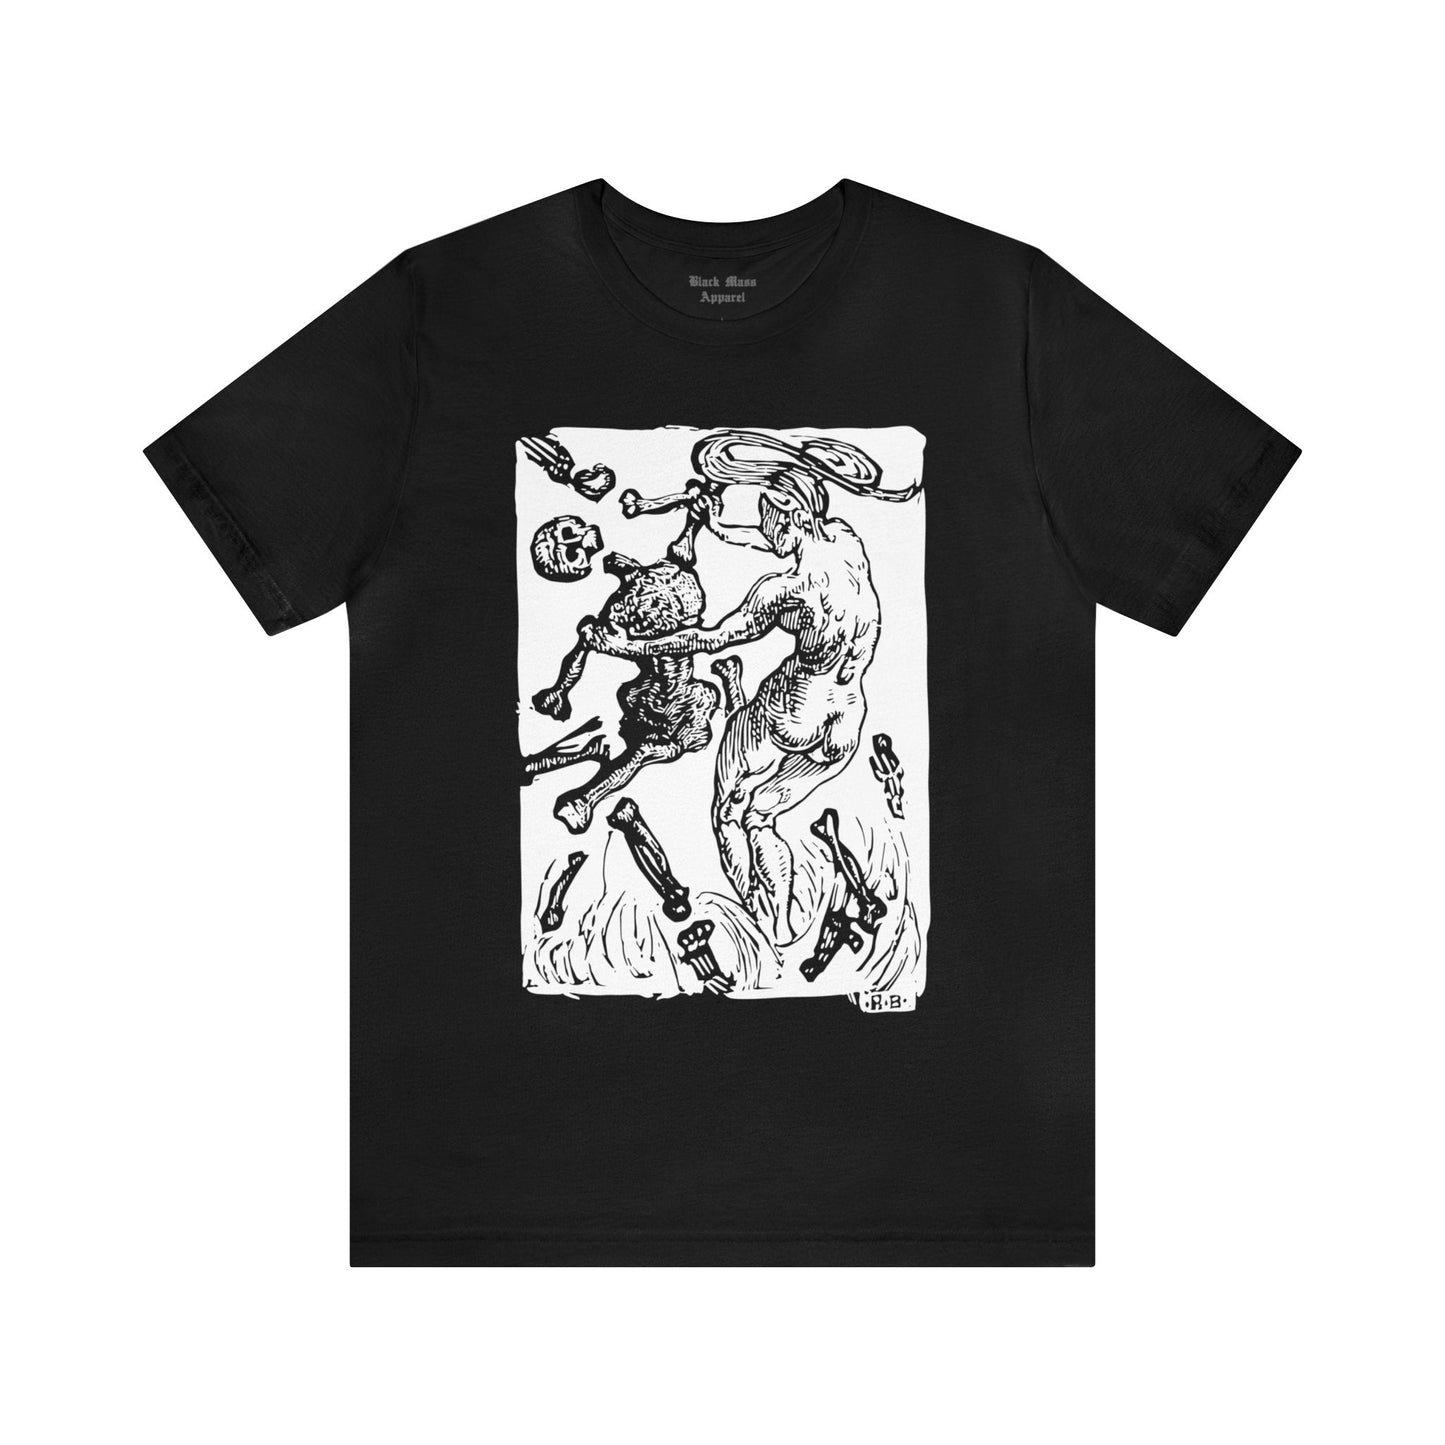 Totentanz VII - Black Mass Apparel - T-Shirt